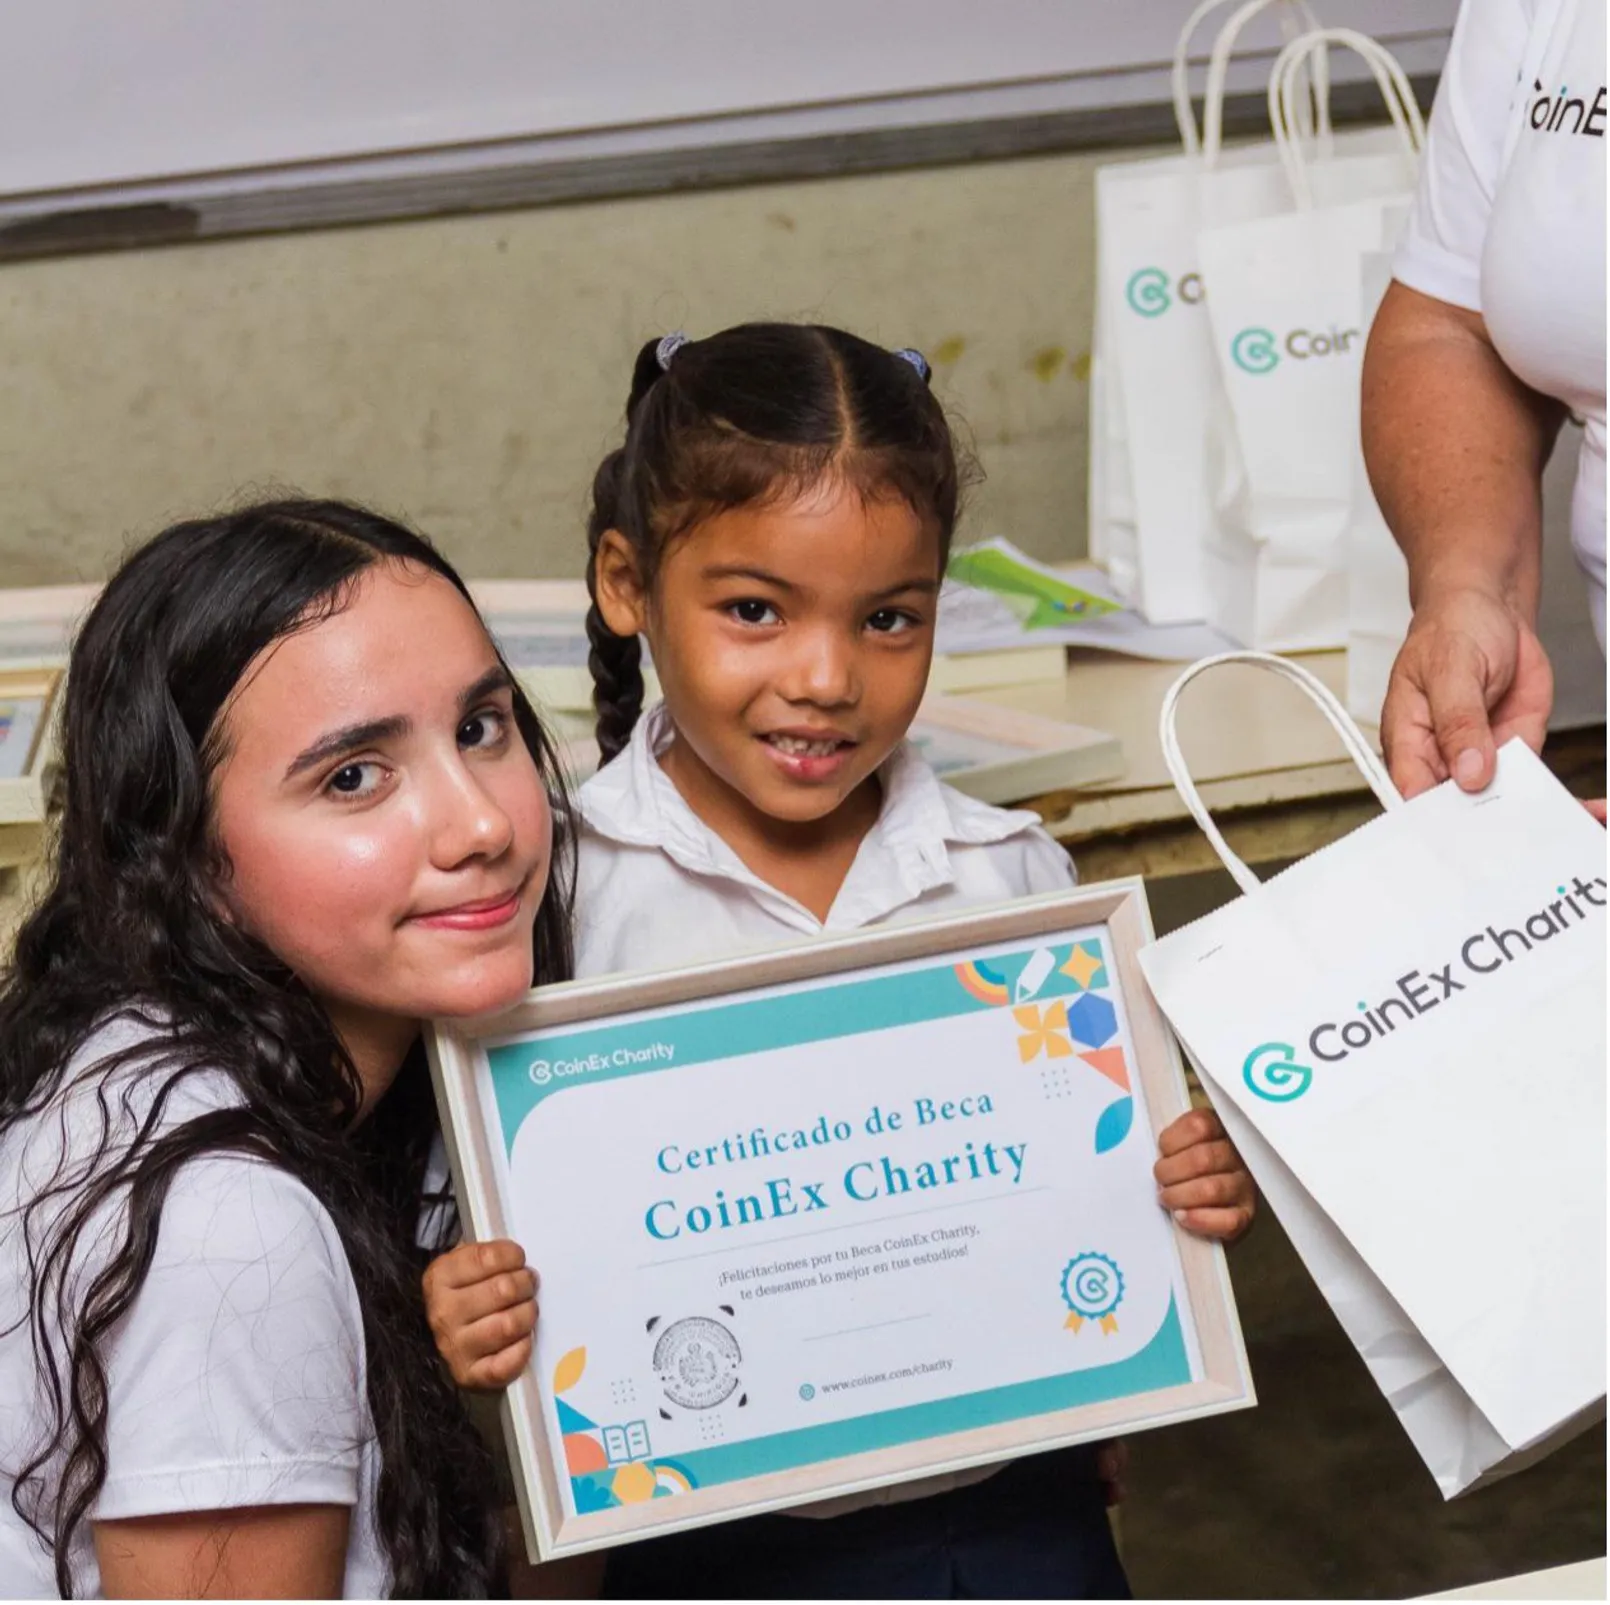 CoinEx Charity สนับสนุนการศึกษาของเวเนซุเอลา โดยใช้ความรู้เพื่อช่วยเหลือโรงเรียนยากไร้